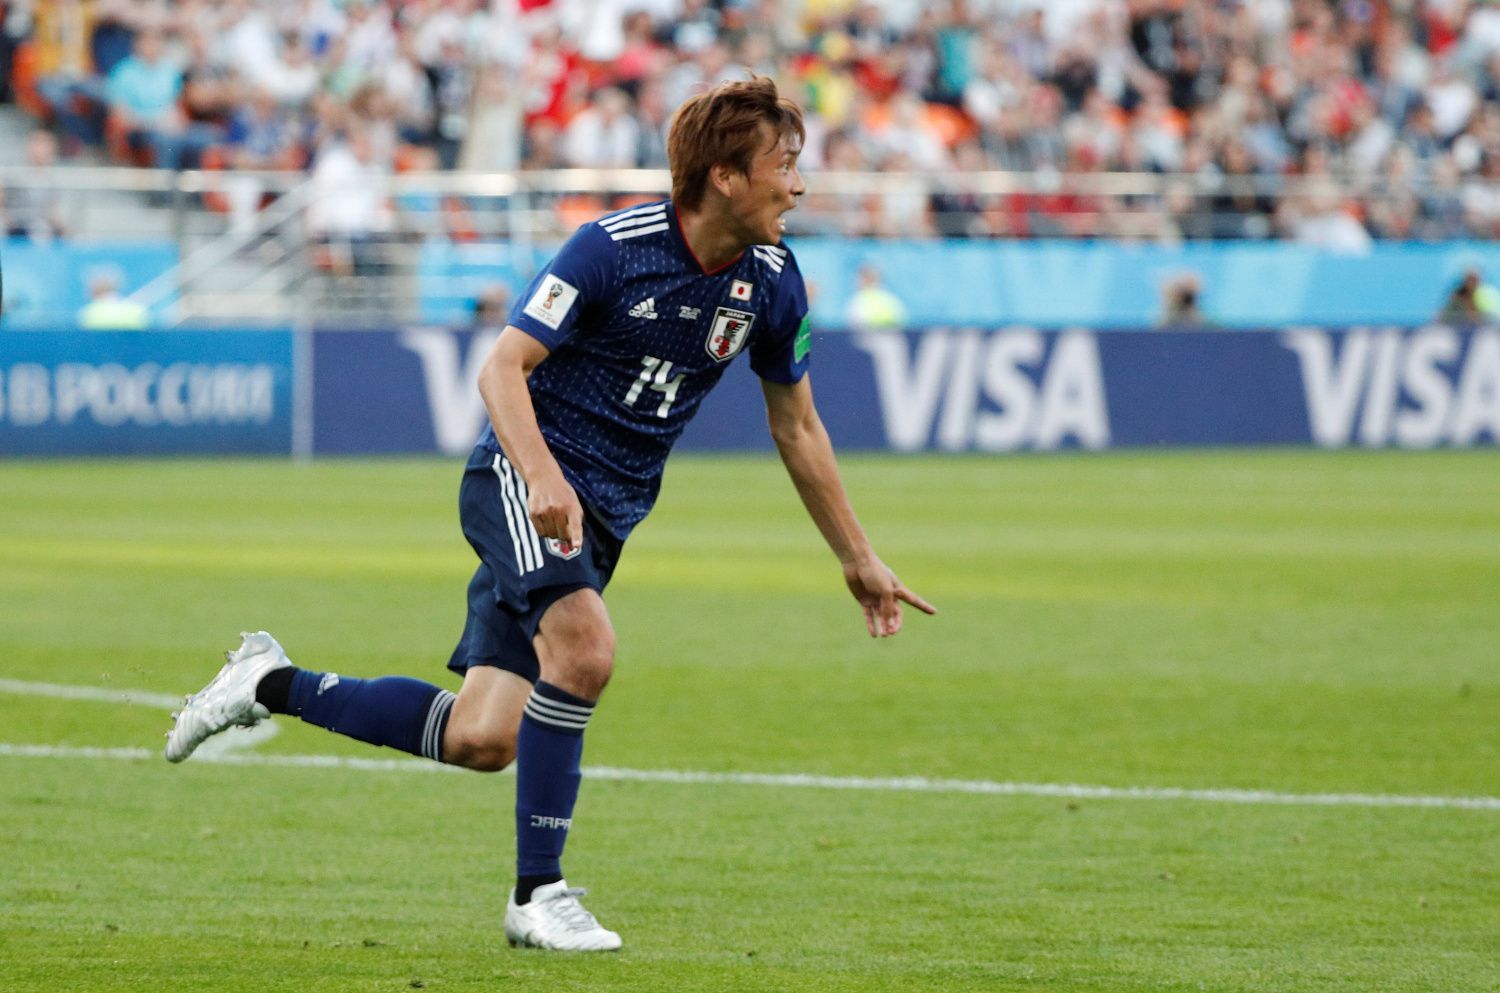 Takaši Inui slaví gól v zápase Japonsko - Senegal na MS 2018